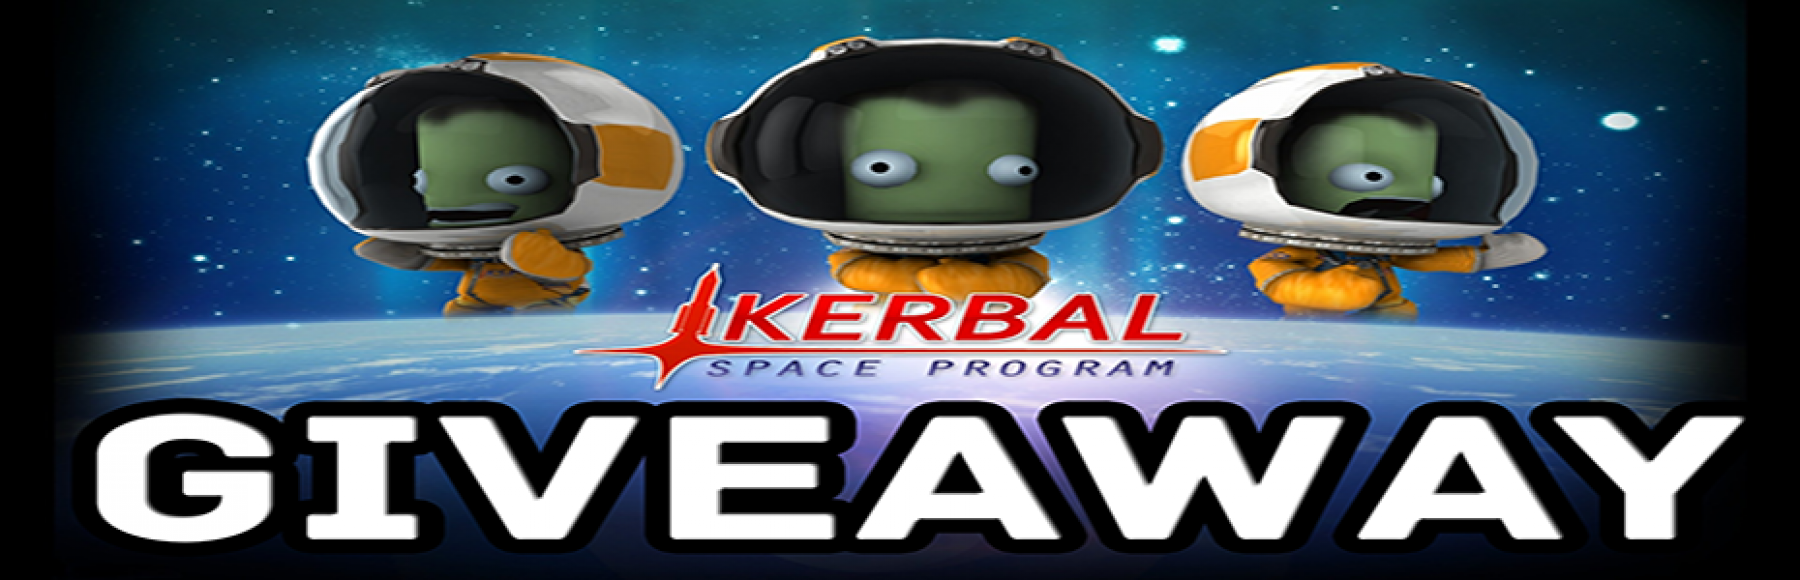 kerbal space program download free